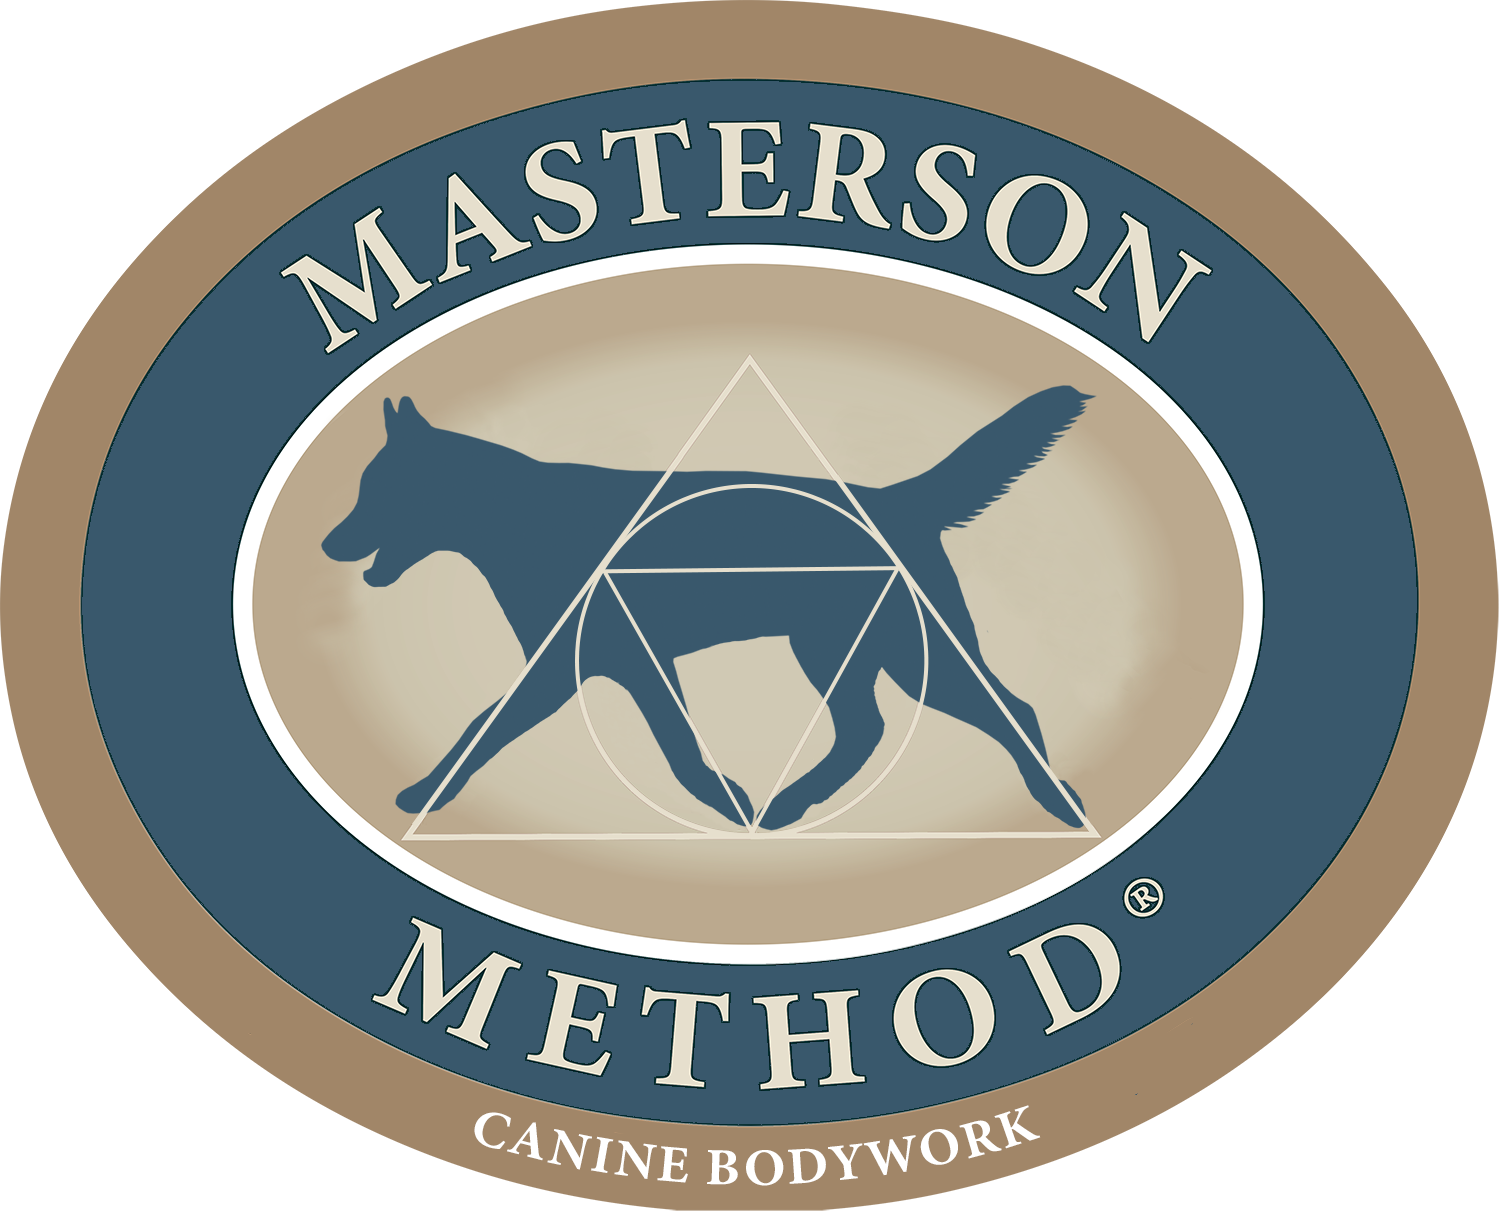 Masterson Method Canine Bodywork logo